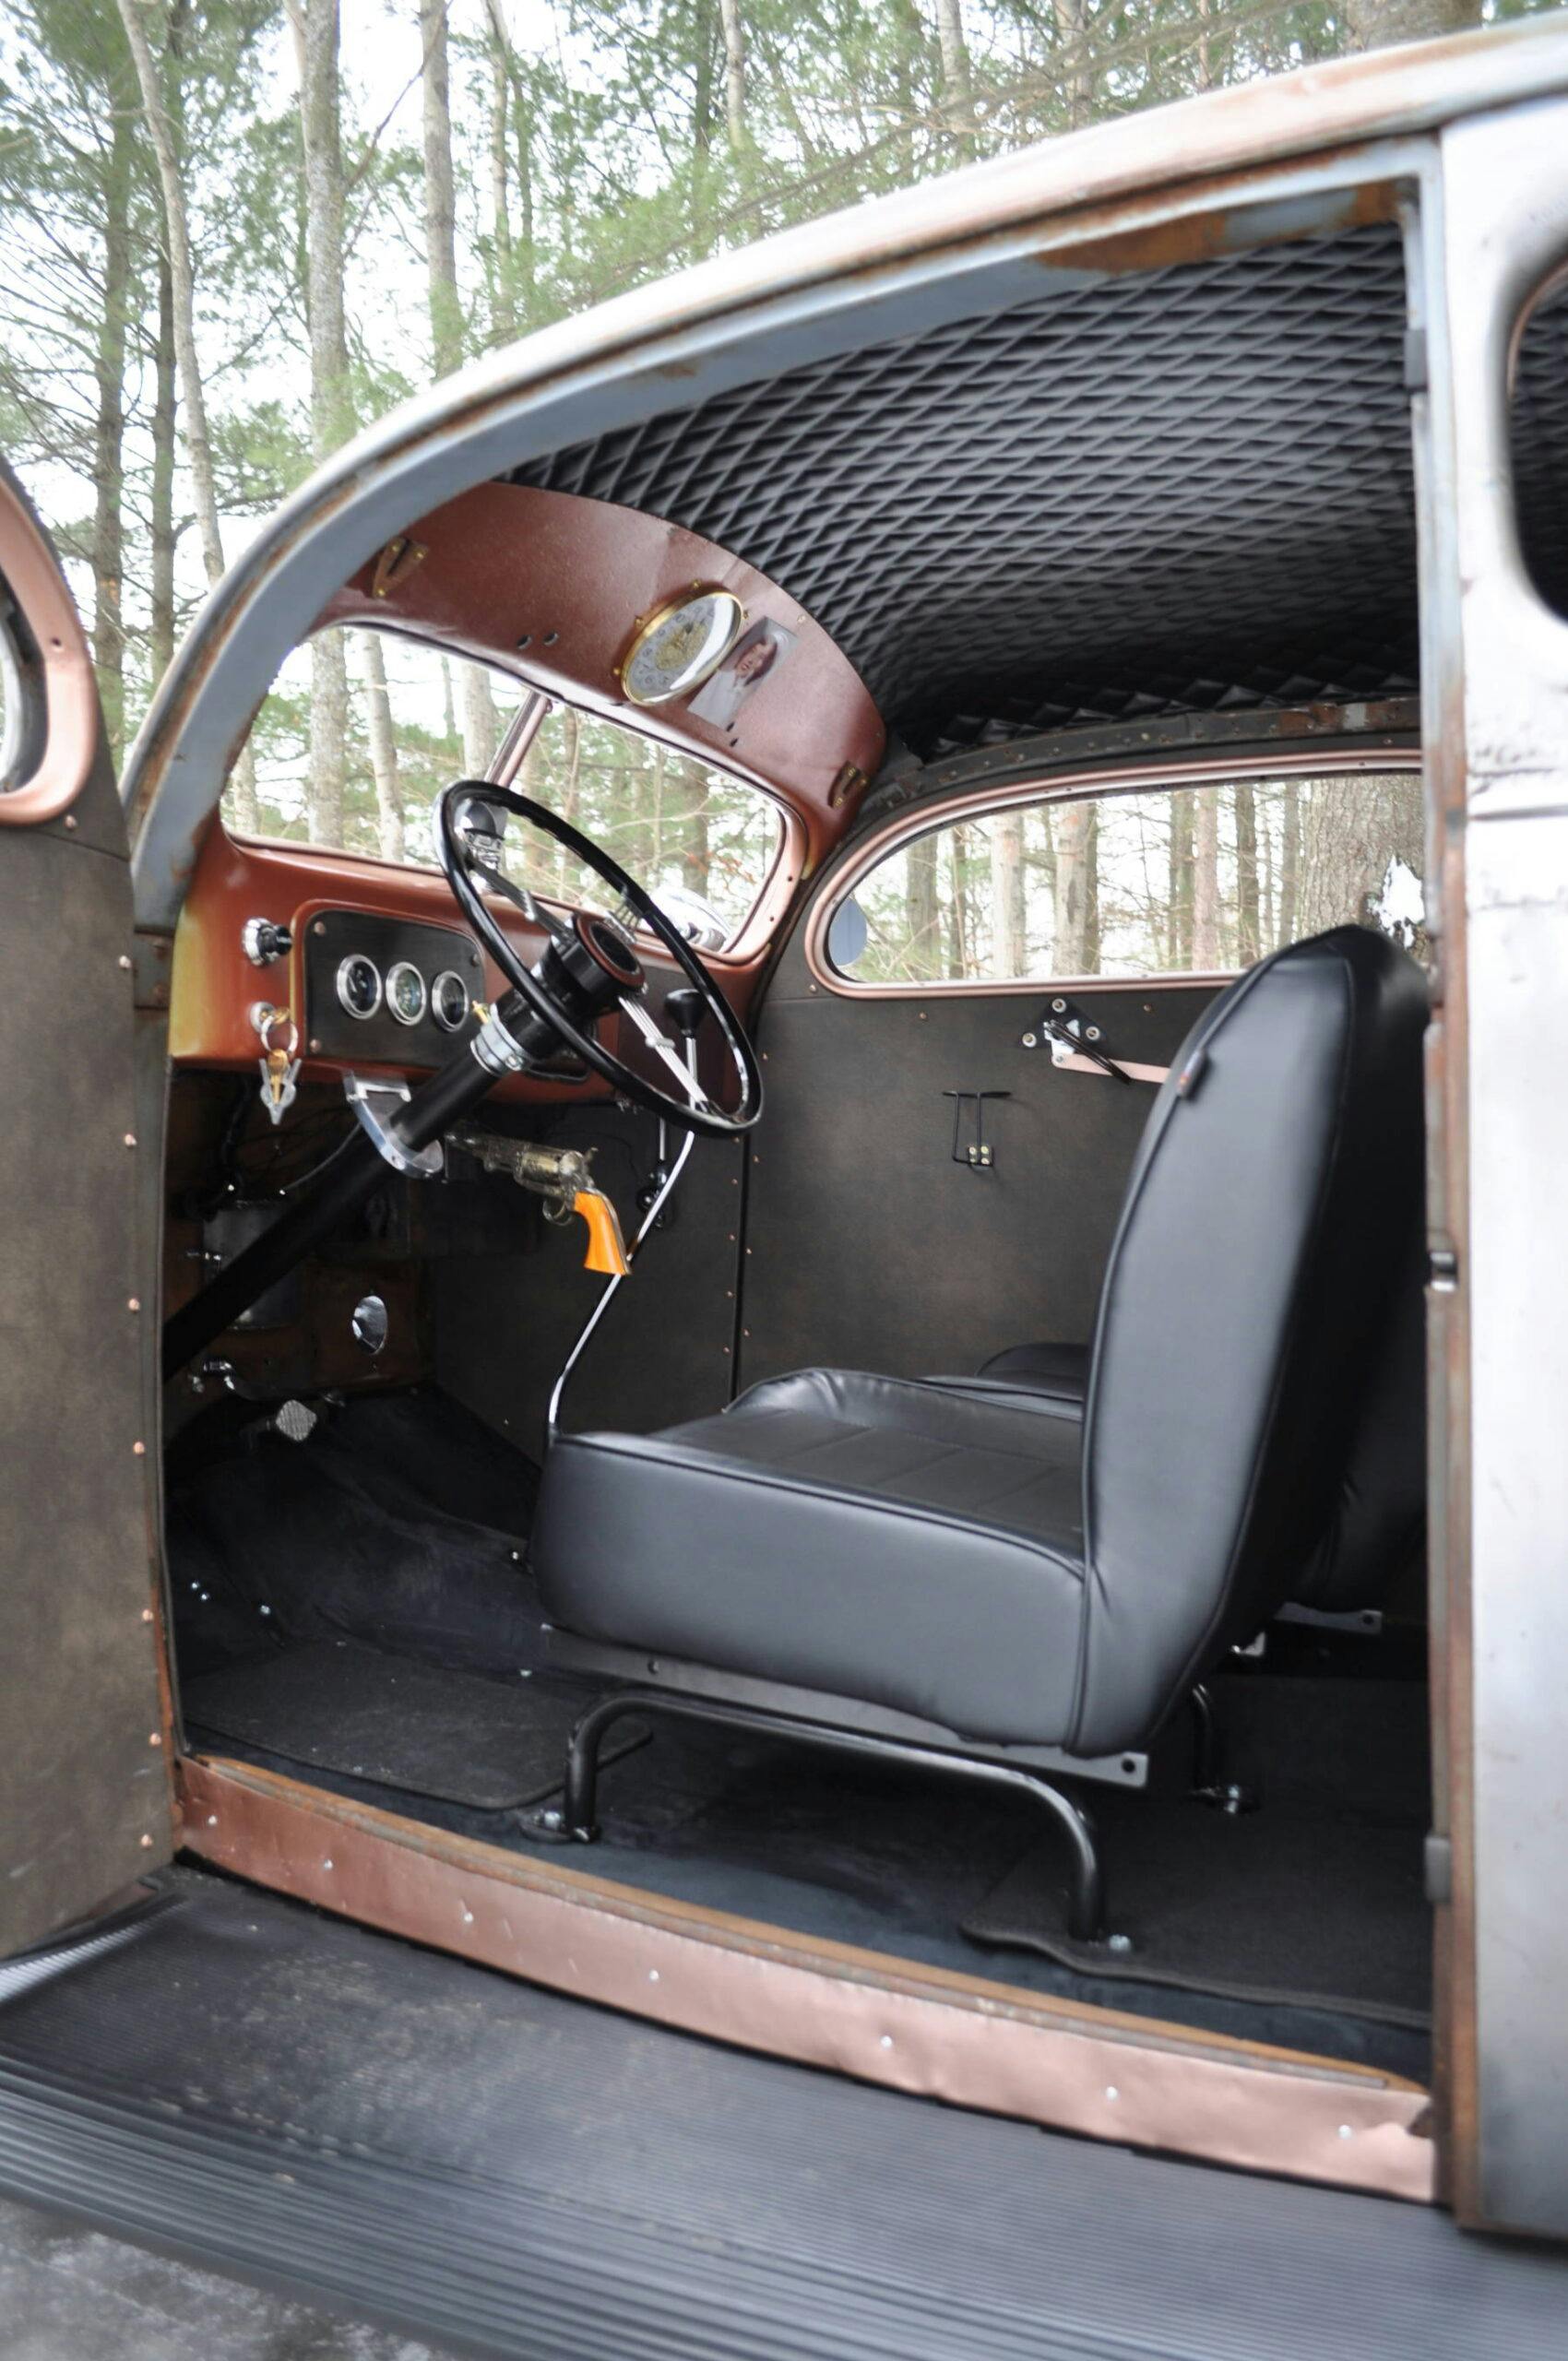 1937 Ford Model 78 Slantback Tudor Hot Rod interior vertical